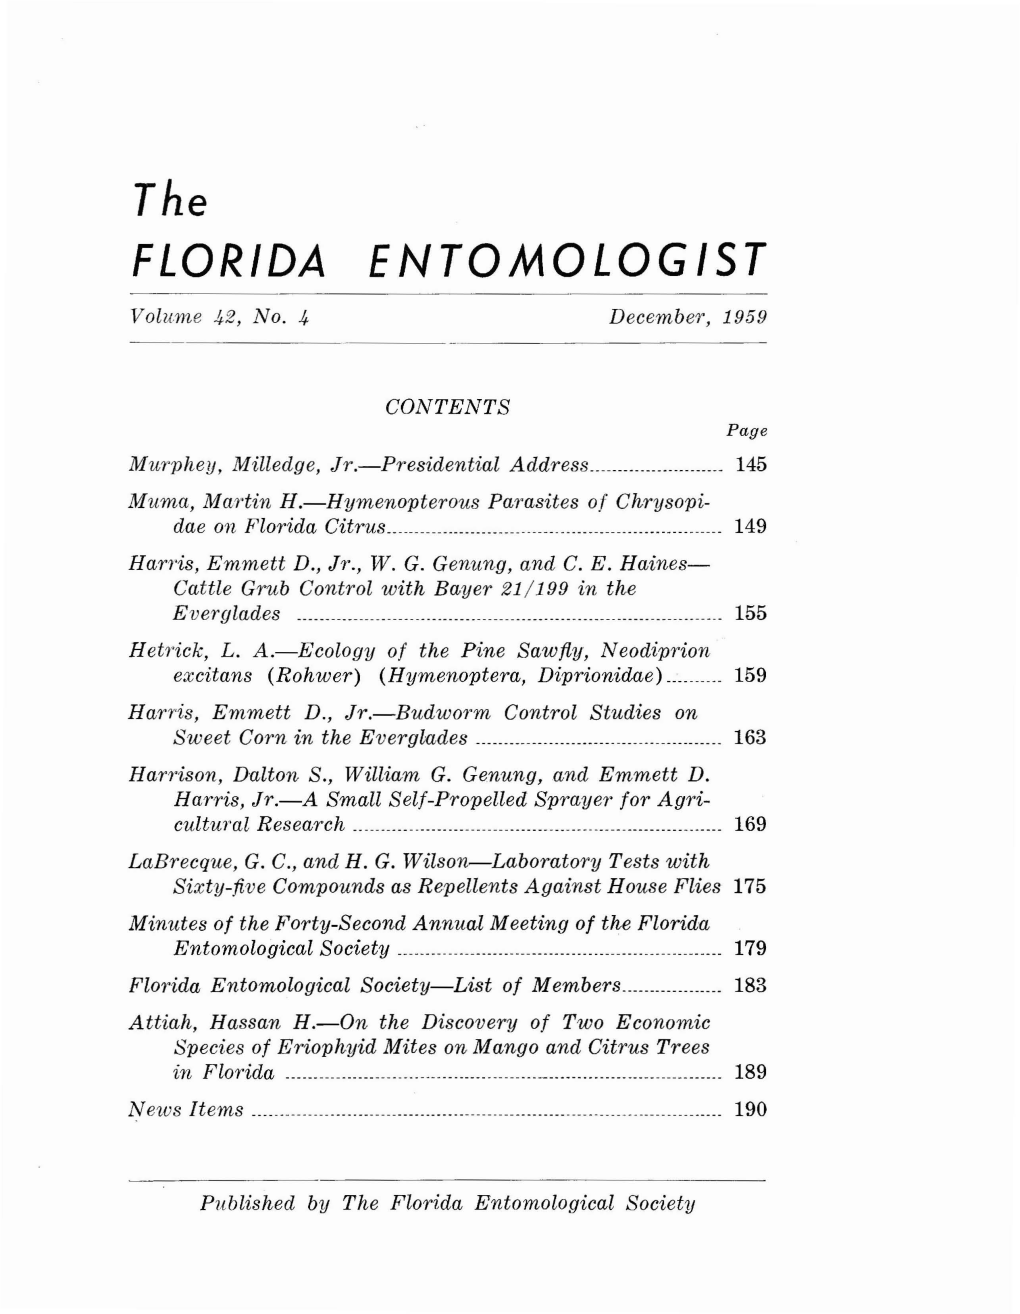 Florida Entomologist